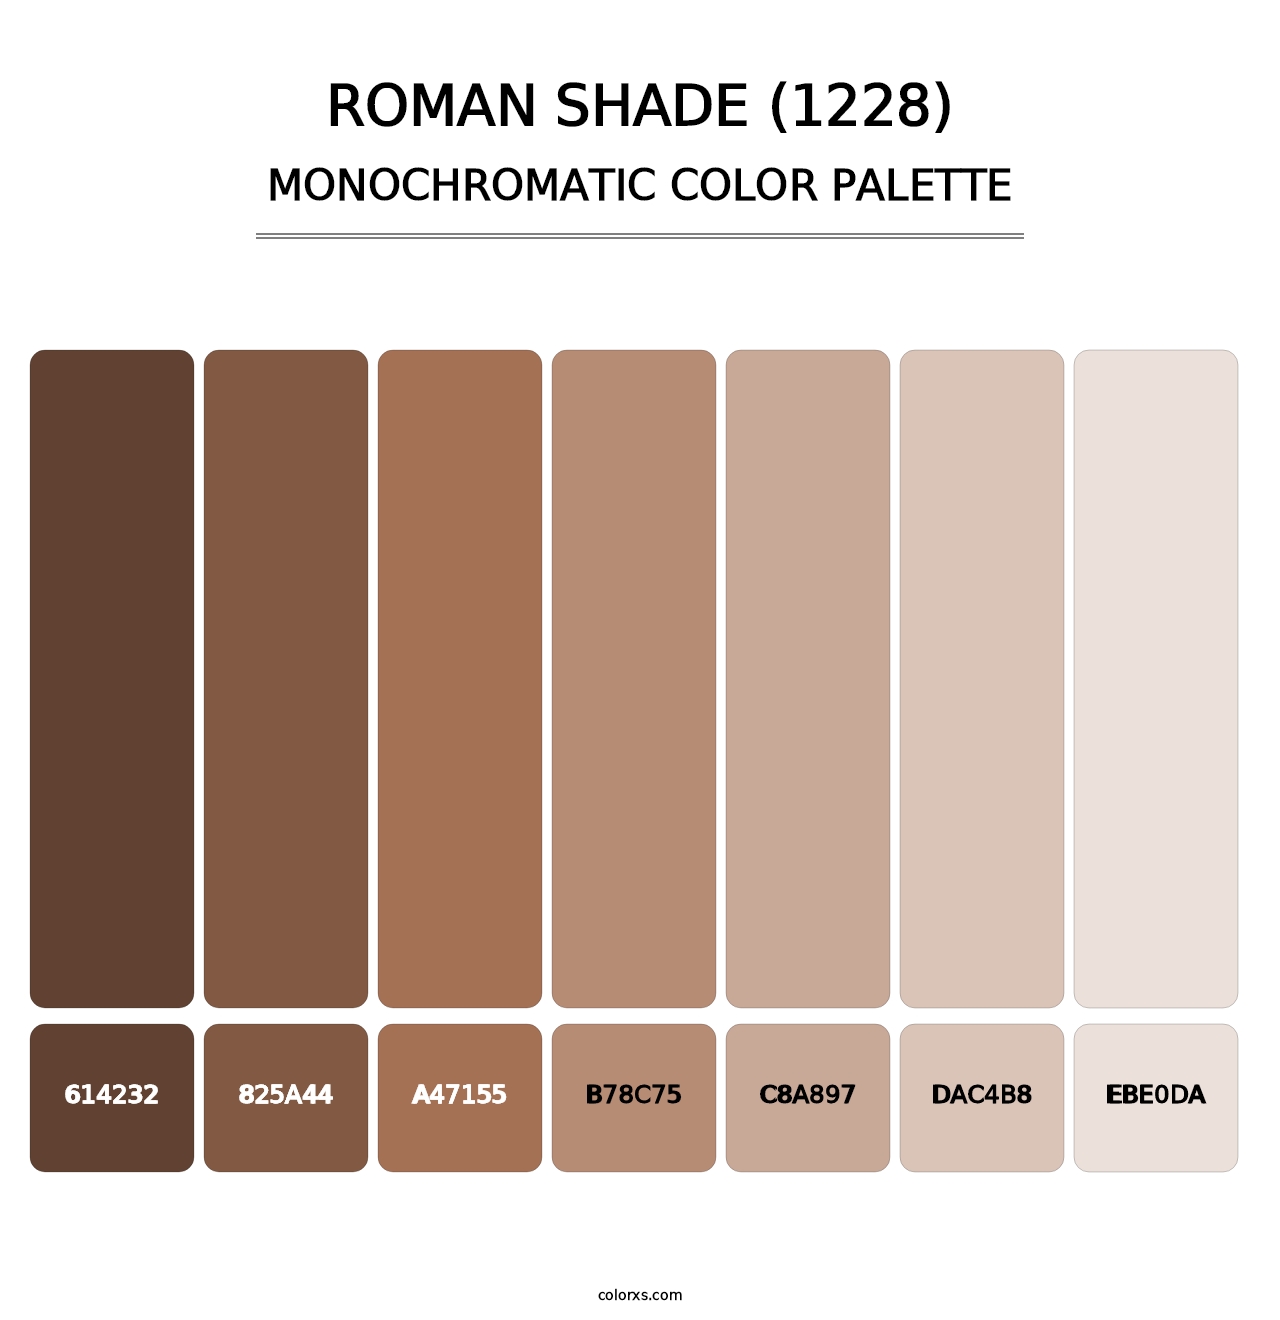 Roman Shade (1228) - Monochromatic Color Palette